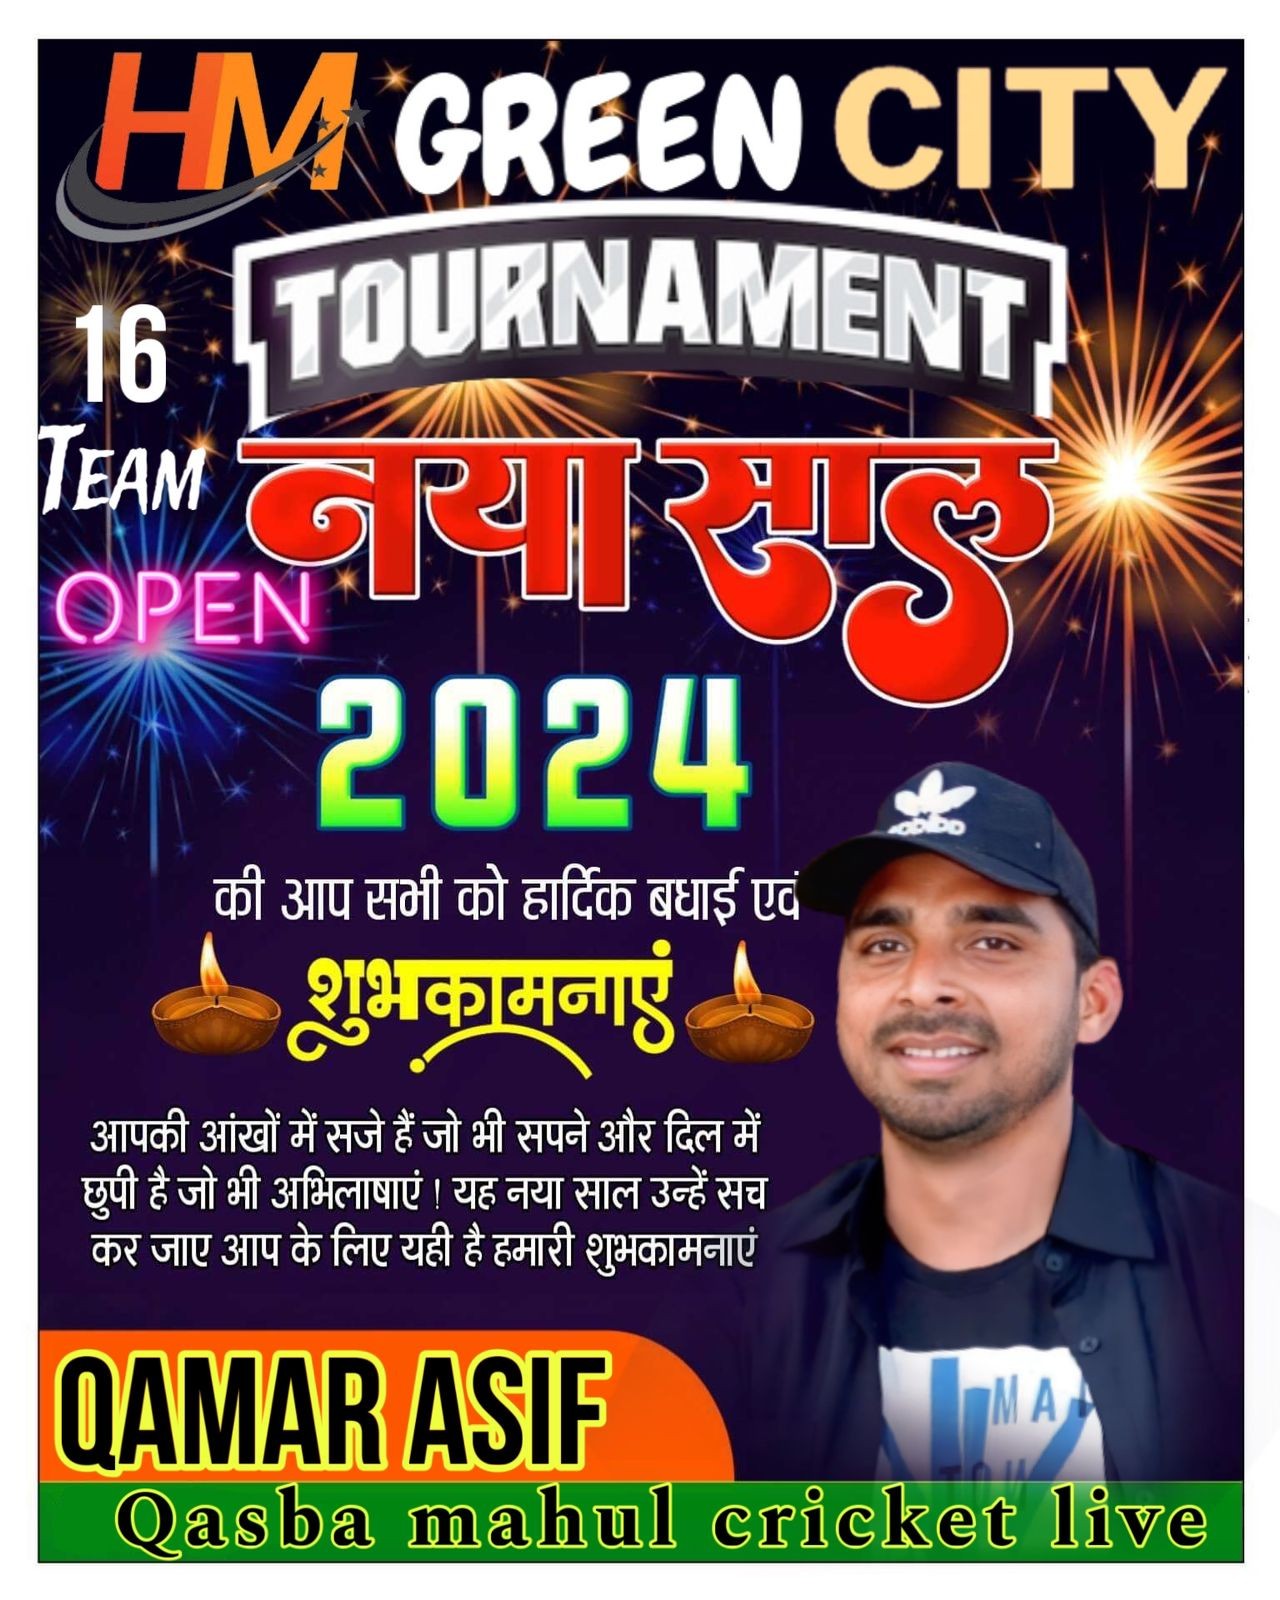 Late Omkar Singh Memorial cricket tournament